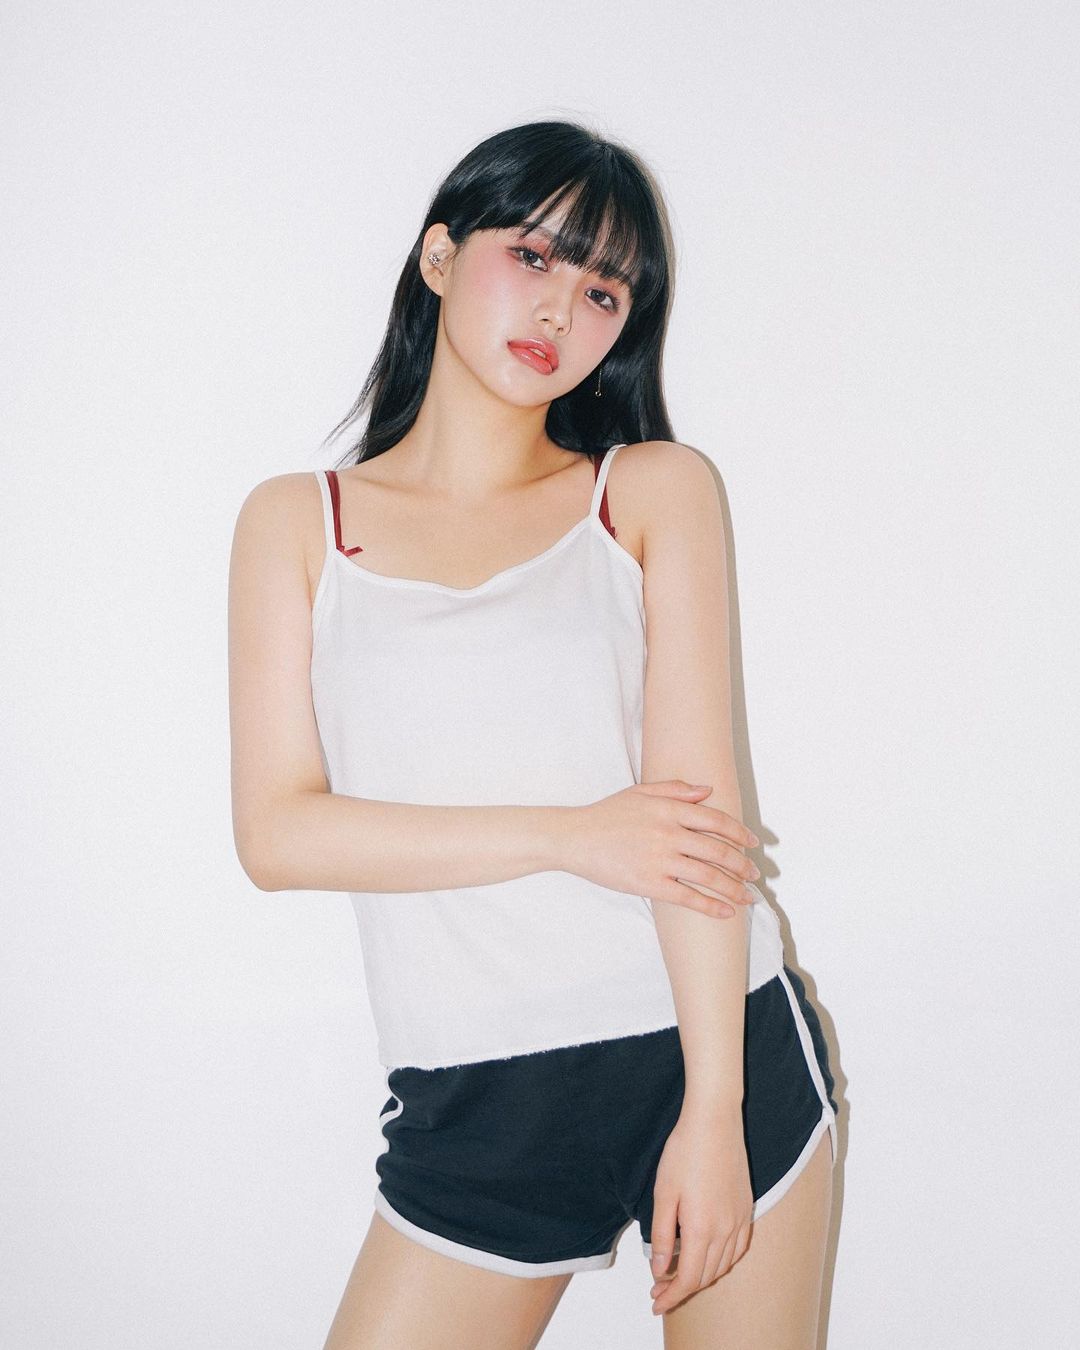 Yo-na (Girl Crush Member) Bio, Wiki, Age, Facts & More